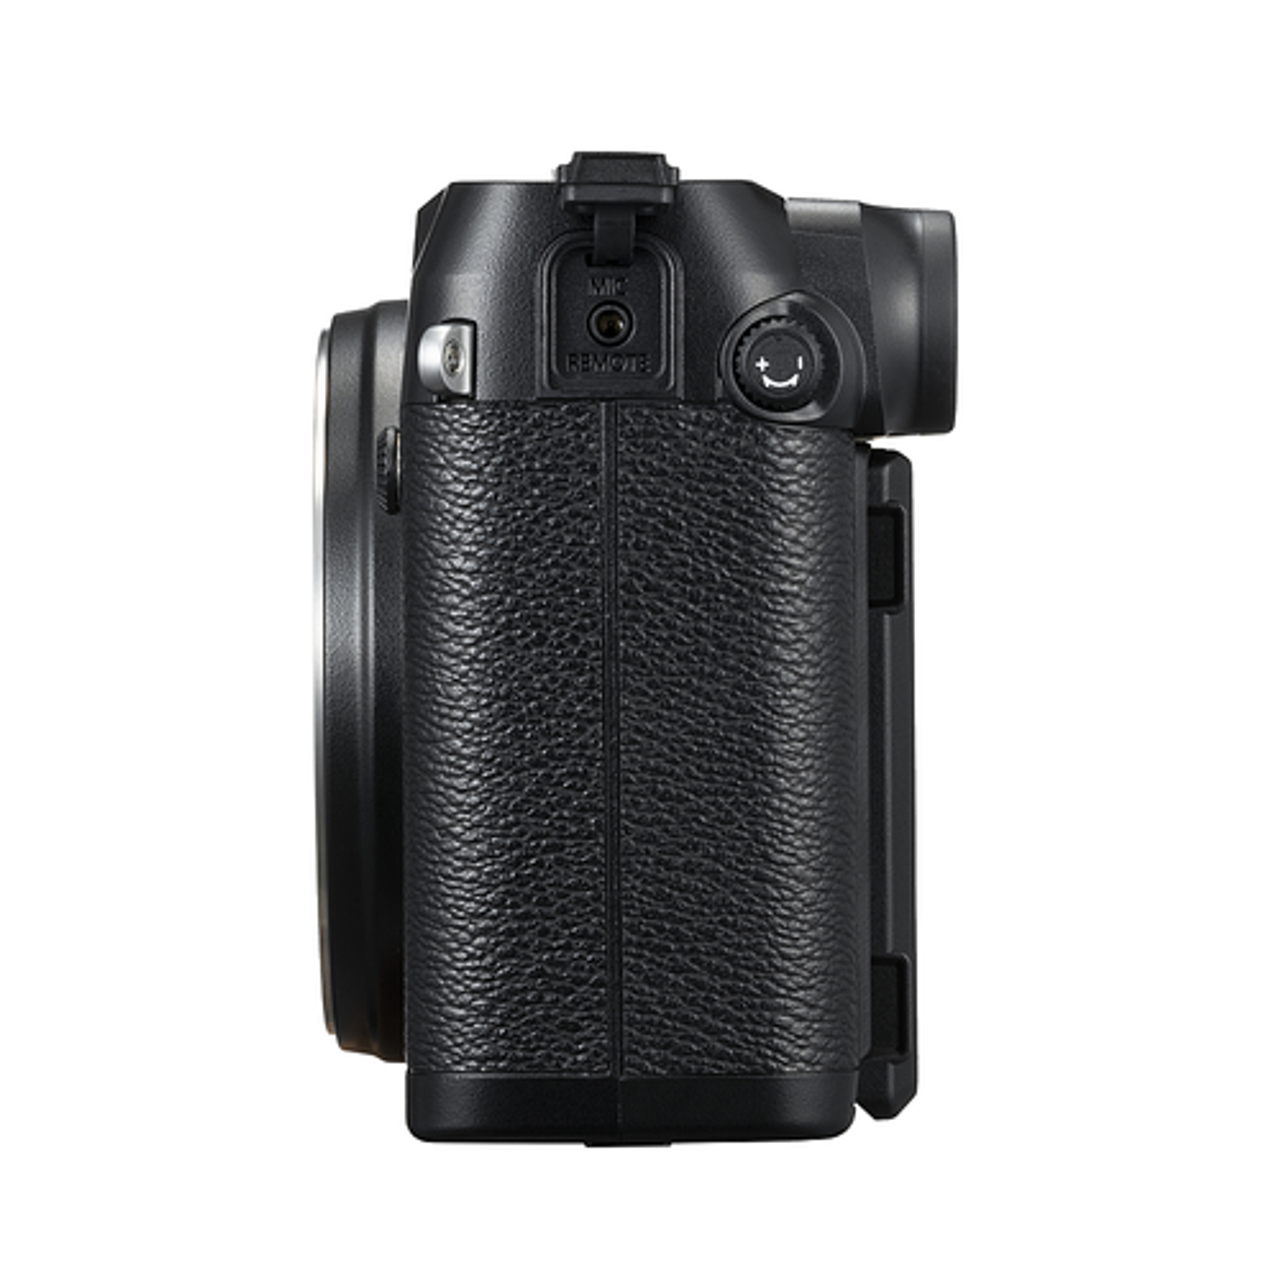 Fujifilm - GFX 50R Mirrorless Camera Body - Black